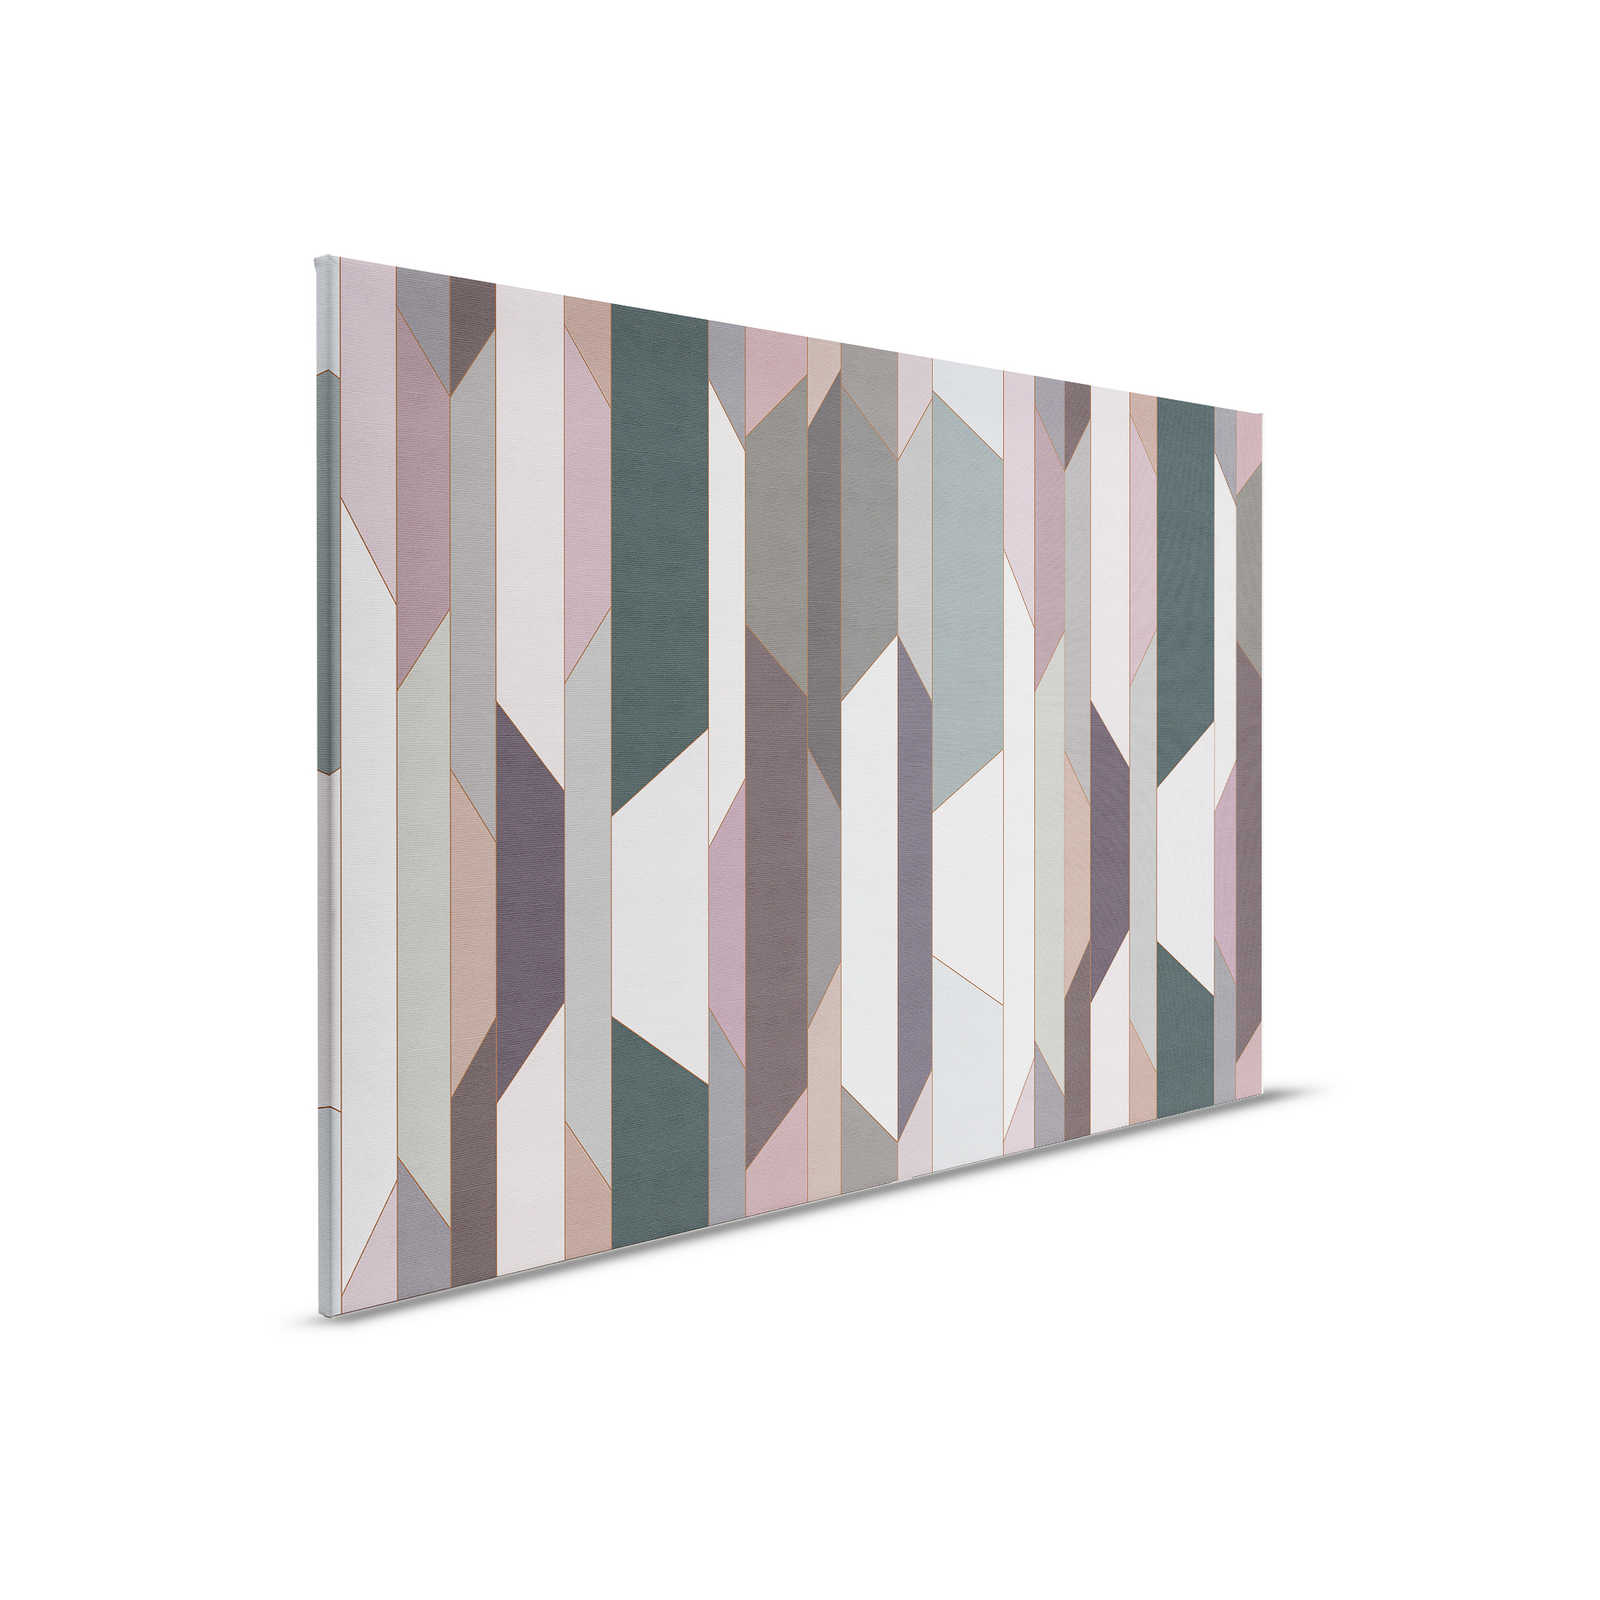         Fold 2 - Leinwandbild mit geometrischem Retro-Muster – 0,90 m x 0,60 m
    